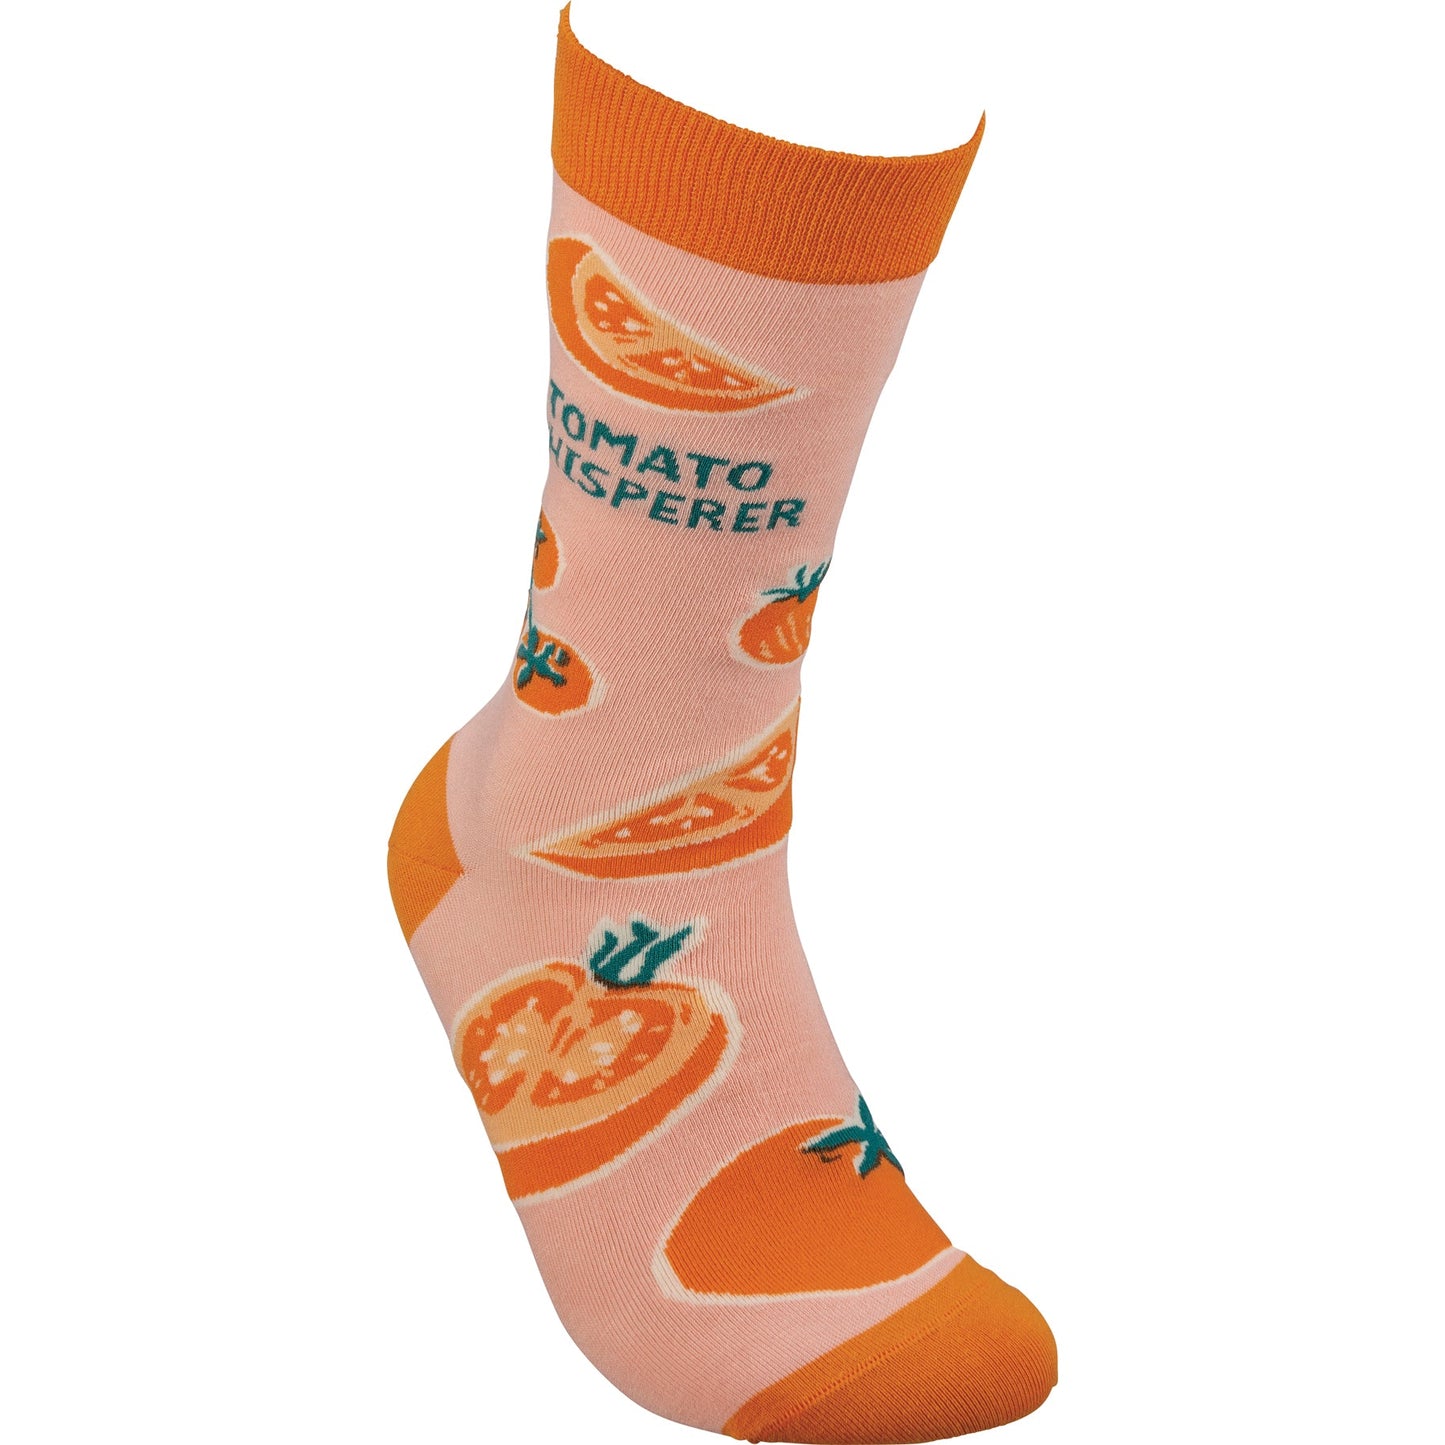 Tomato Whisperer Socks | Funny Novelty Socks with Cool Design | Bold/Crazy/Unique Specialty Dress Socks